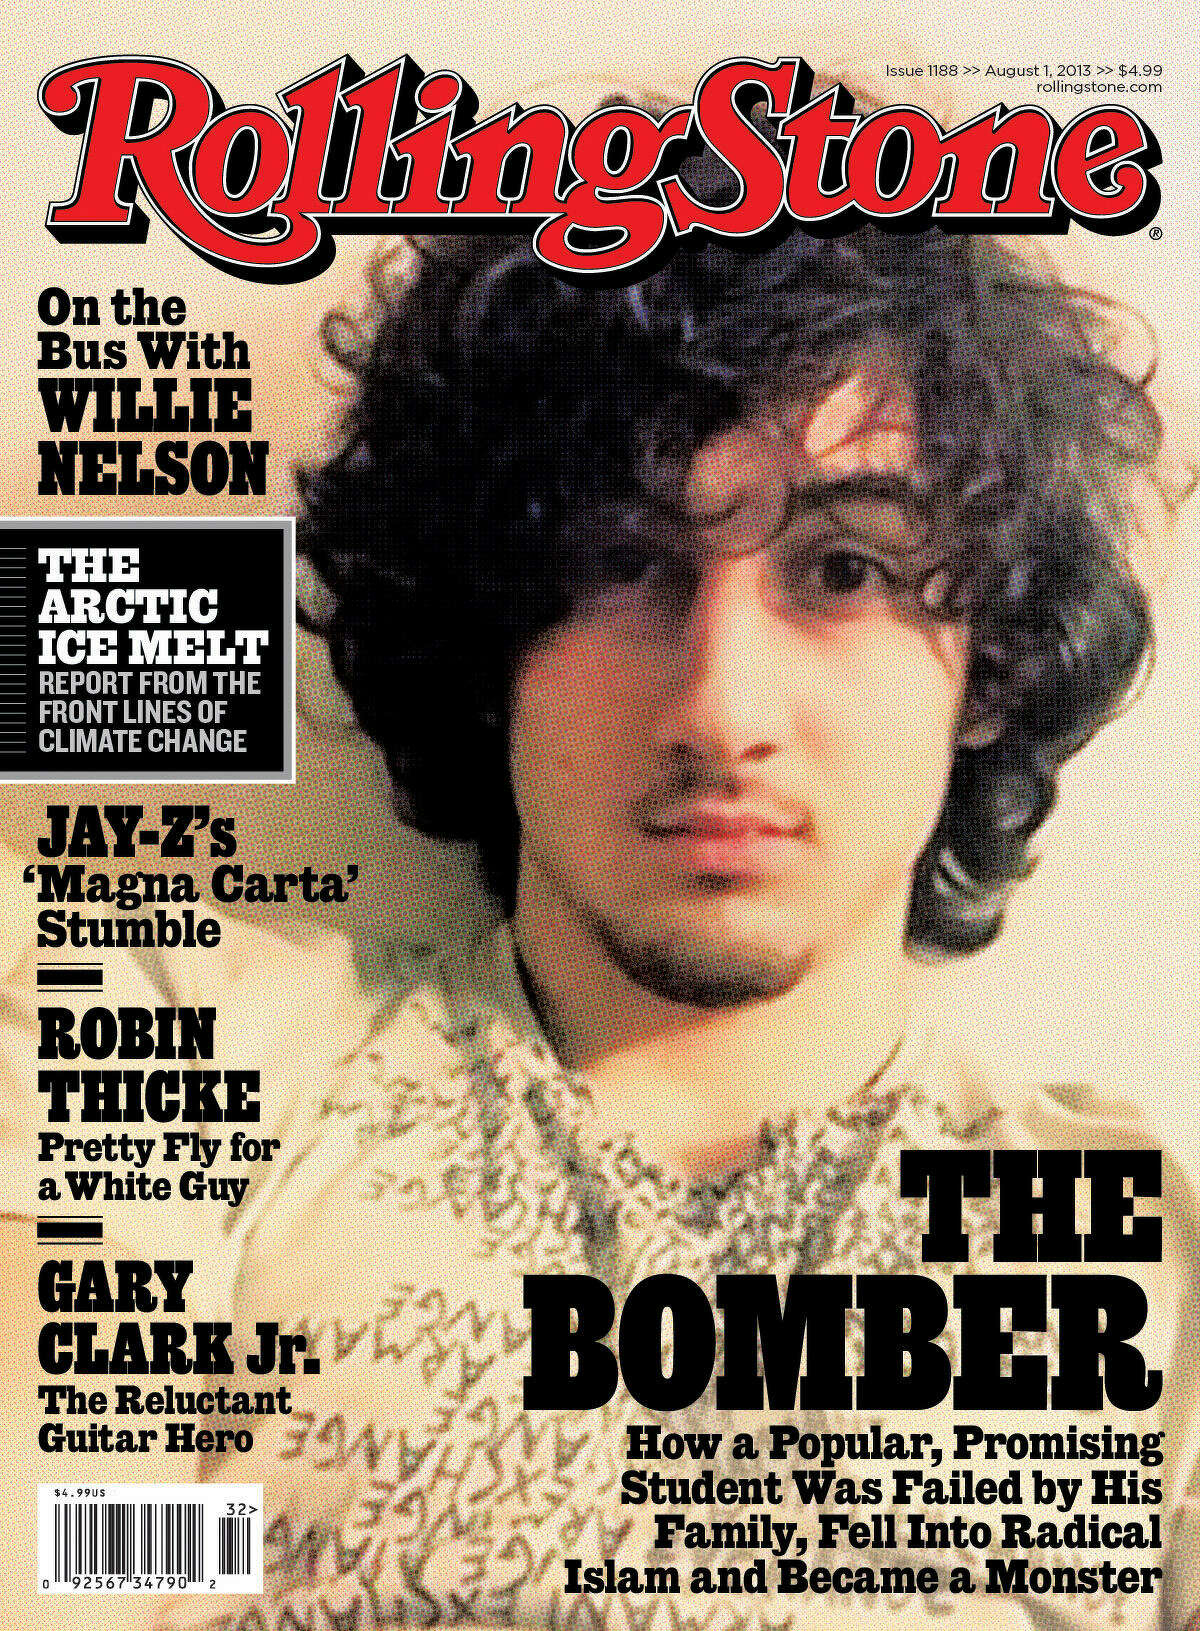 The Aug. 1 “Rolling Stone” cover boy is bombing suspect Dzhokhar Tsarnaev.